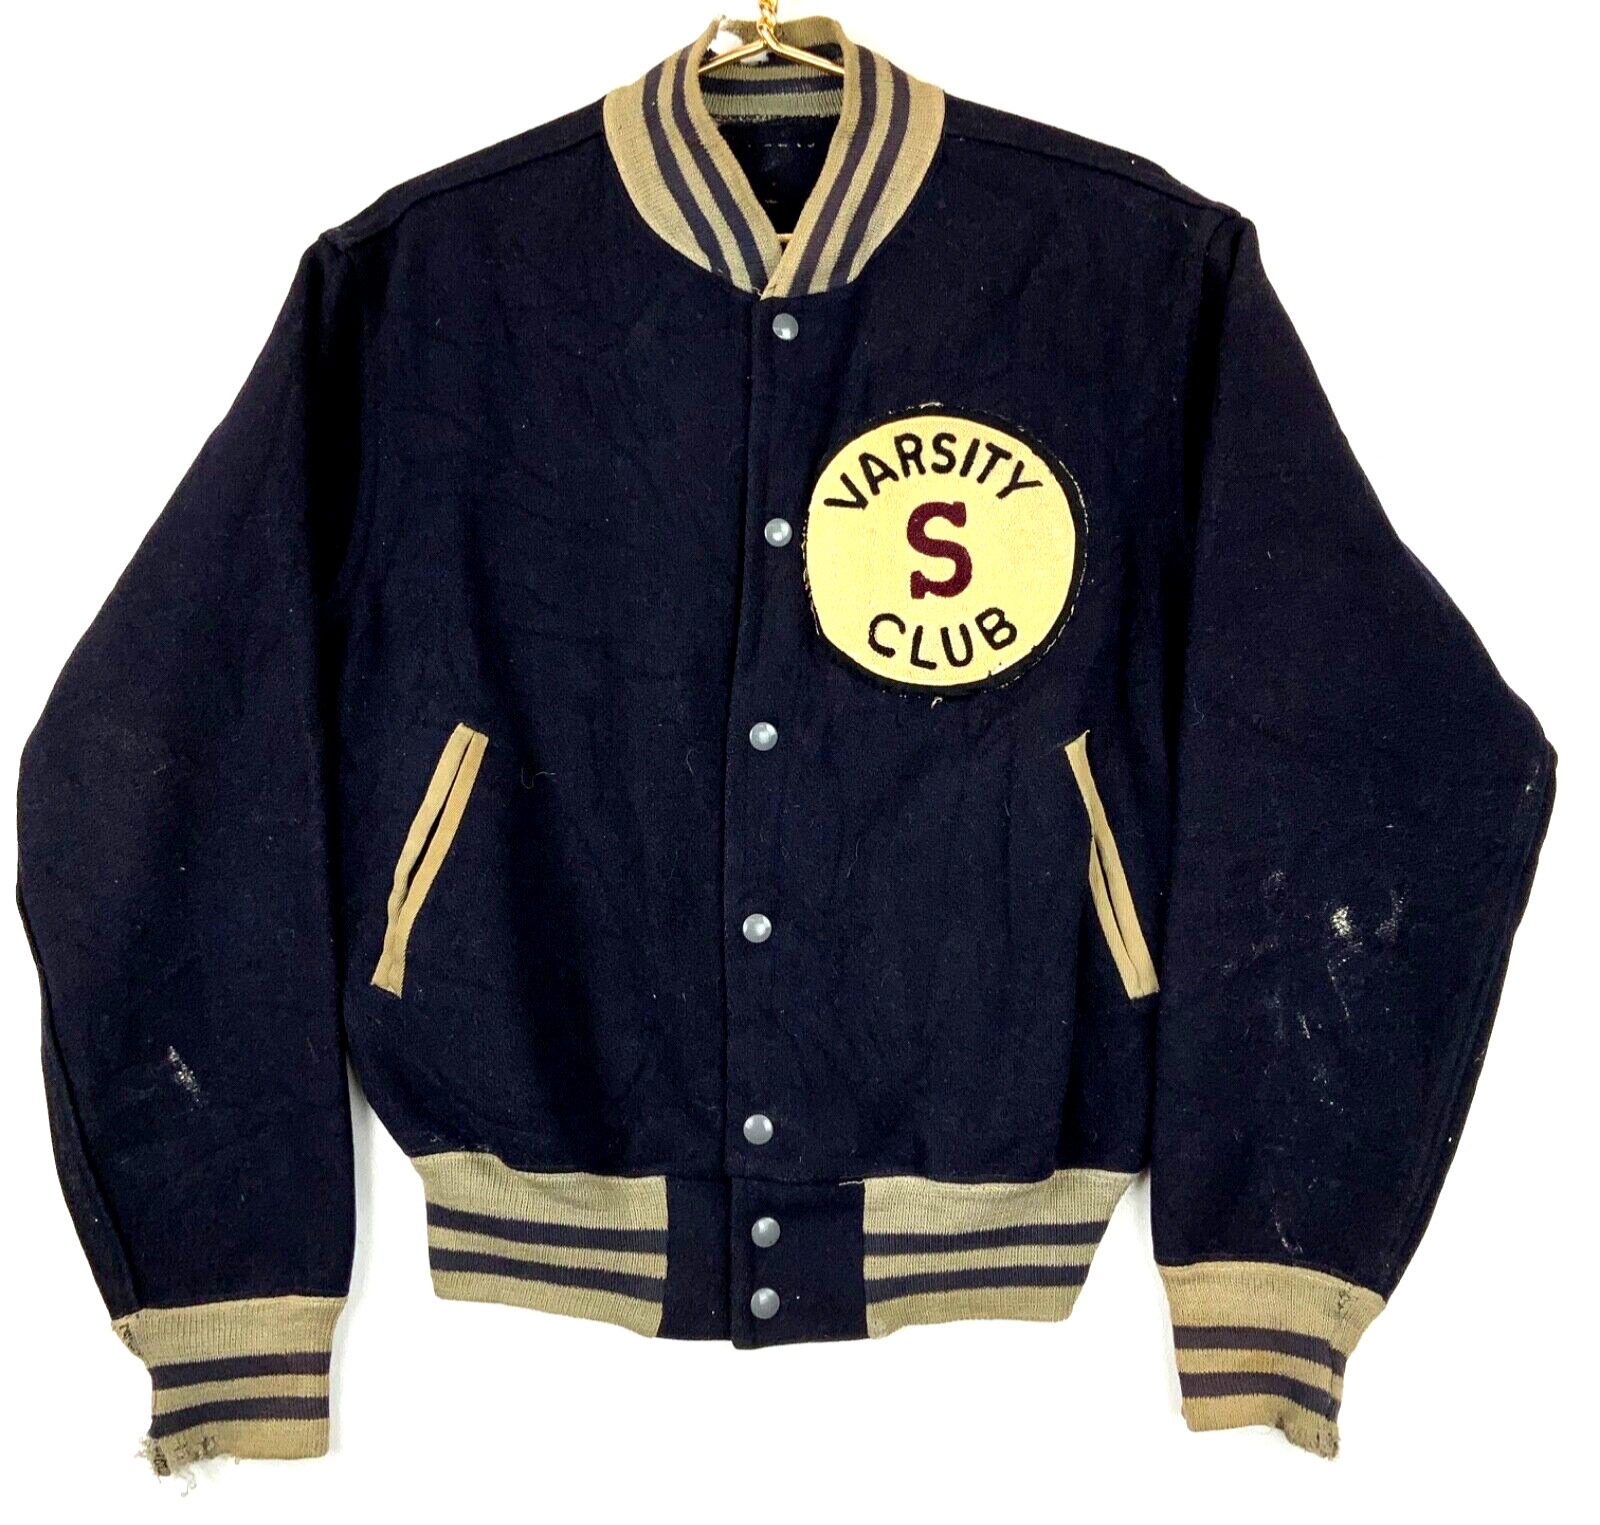 Vintage 30s 40s Varsity S Club Wool Varsity Bomber Jacket Small Blue Distressed